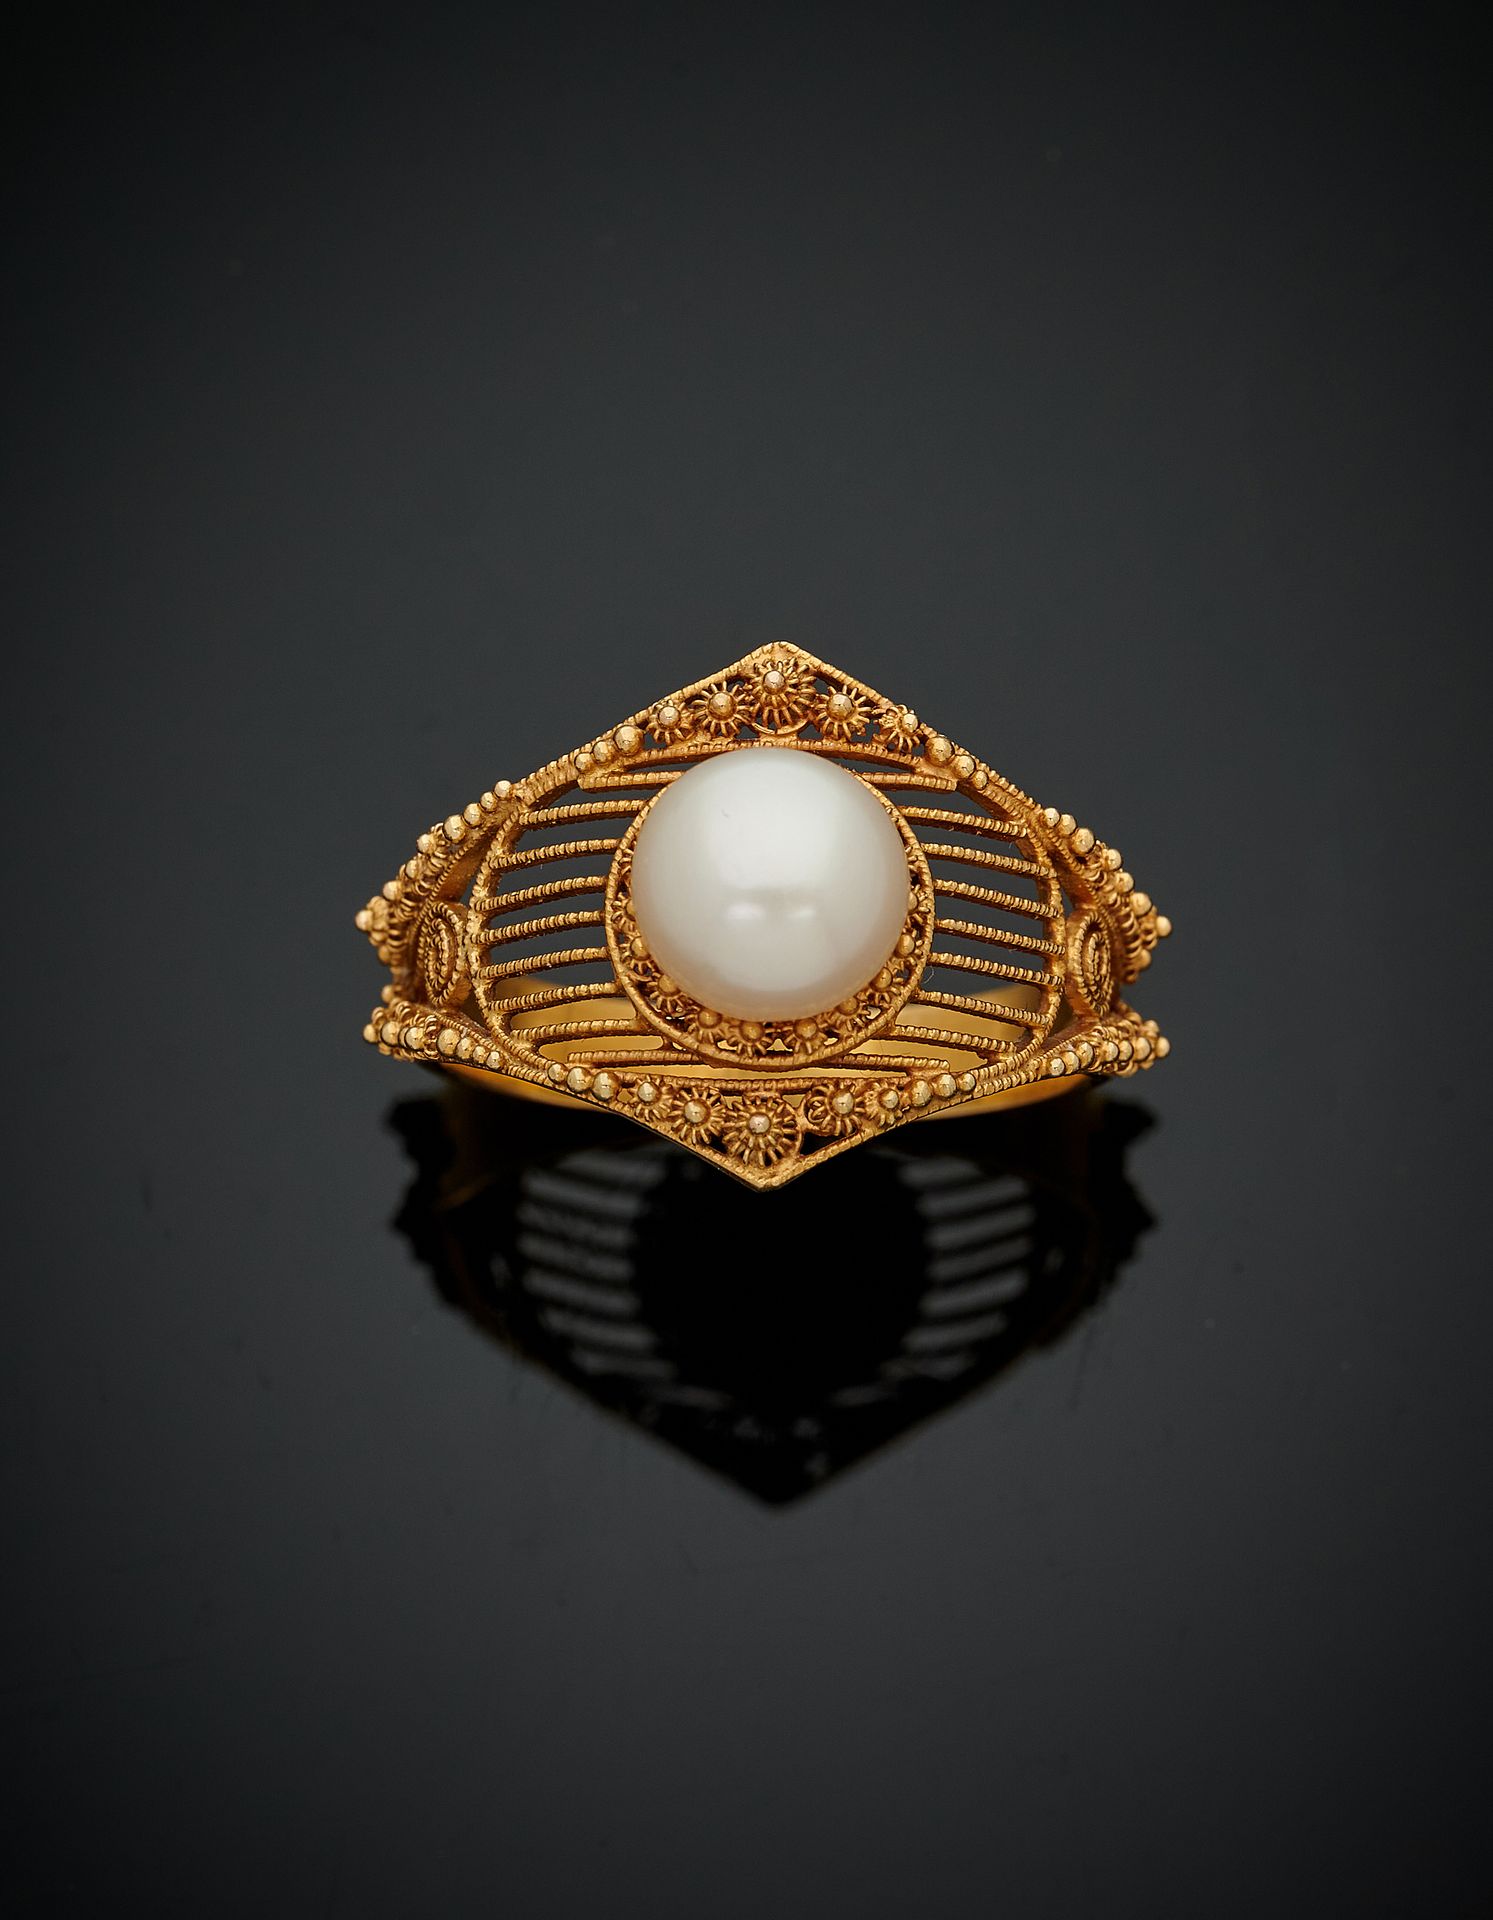 Null 14K黄金（585‰）镂空、细丝和布勒戒指，夹着一颗纽扣形淡水养殖珍珠。
珍珠直径：7.8至7.9毫米
指数：60 - 毛重：3.7克